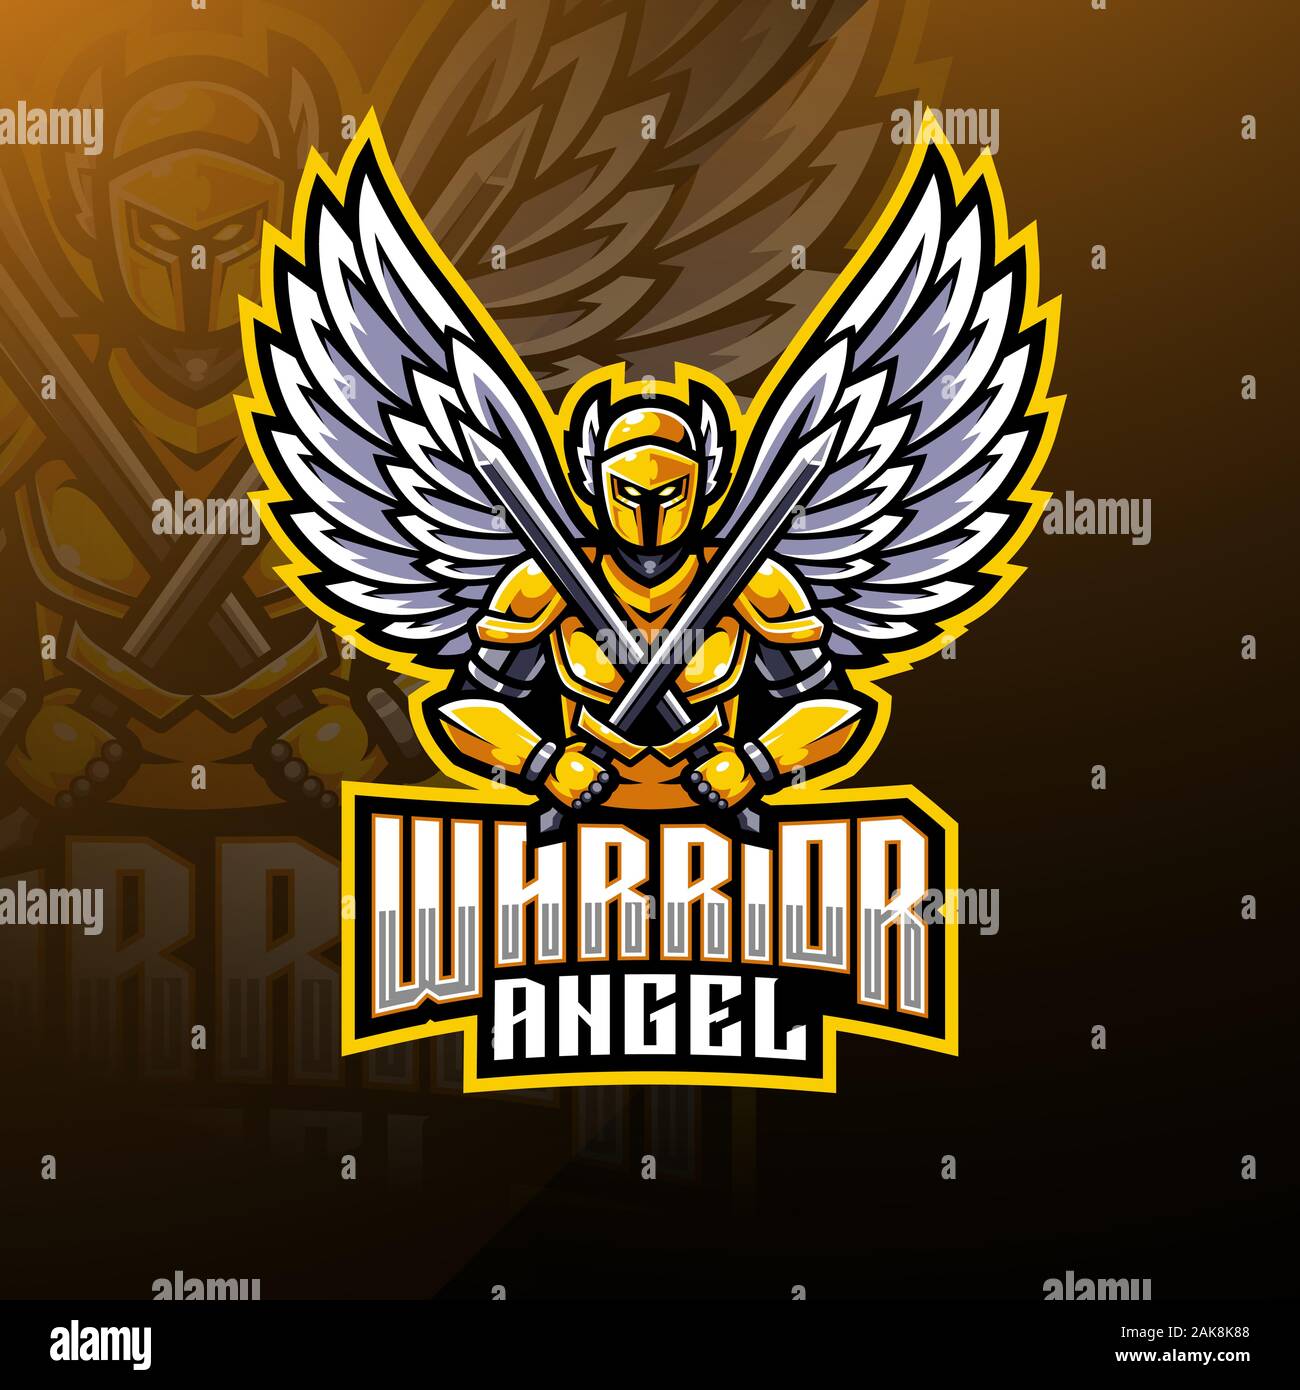 Warrior angel mascot logo design Stock Vector